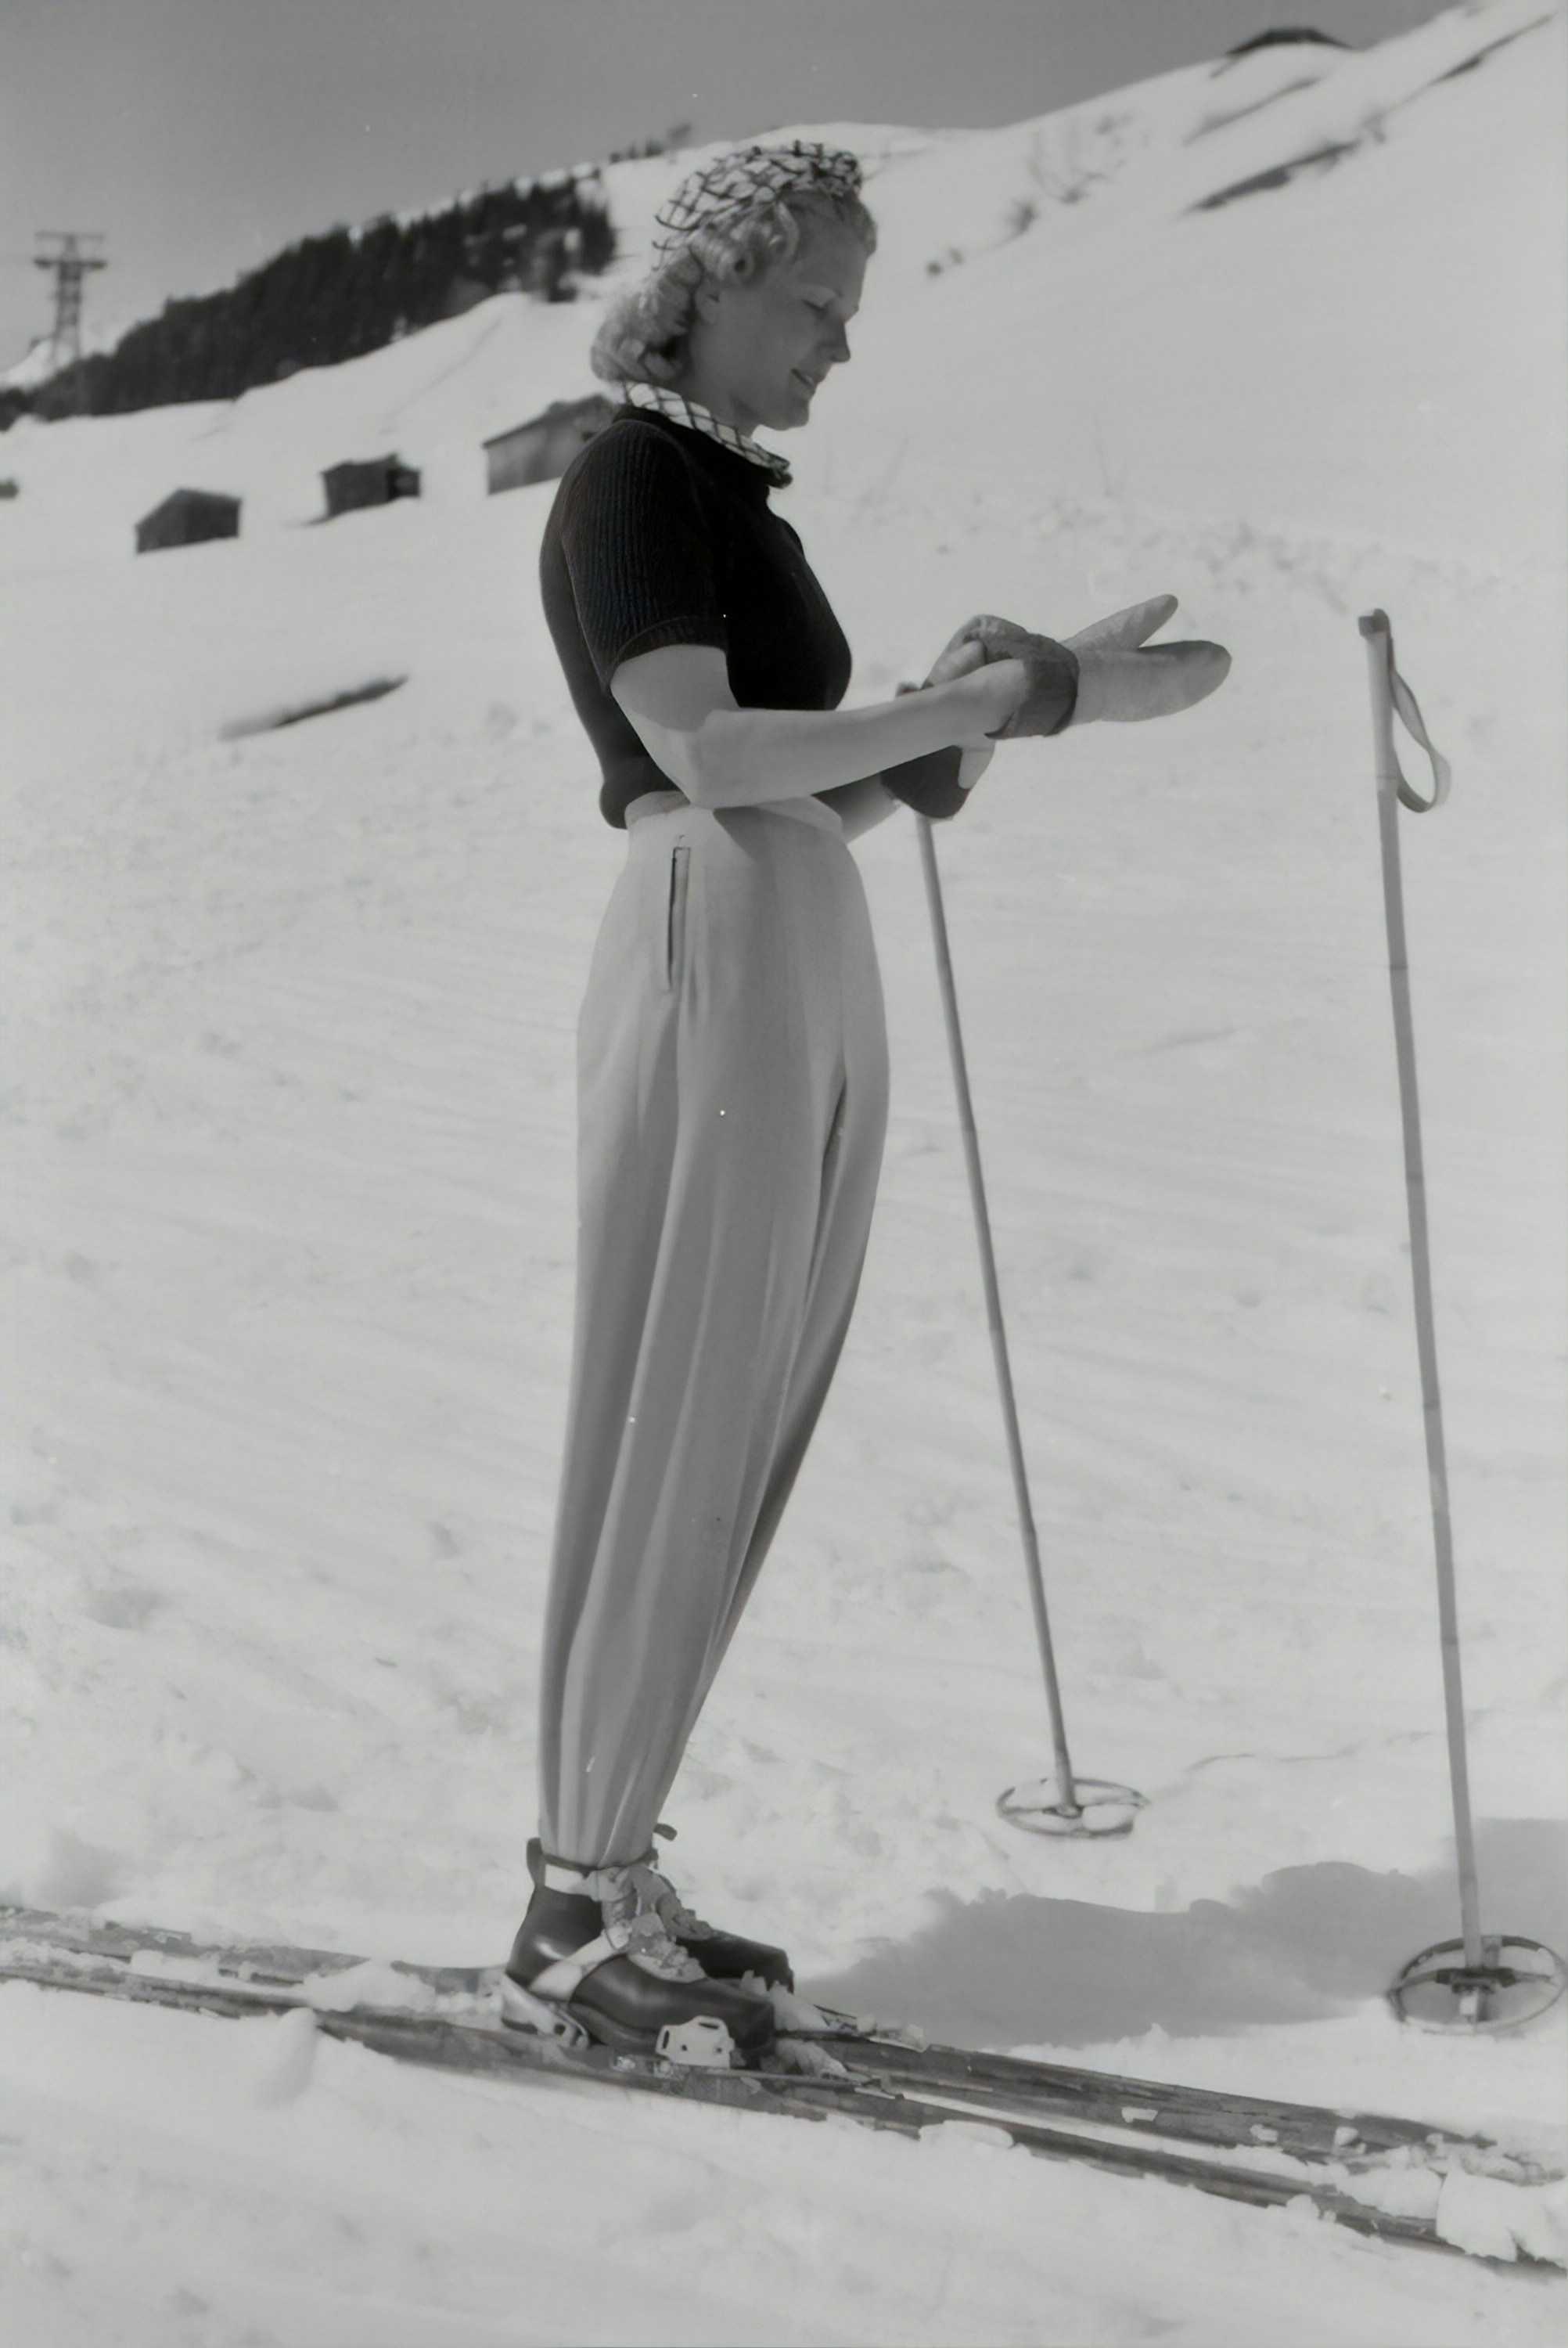 Lady on skis, 1940